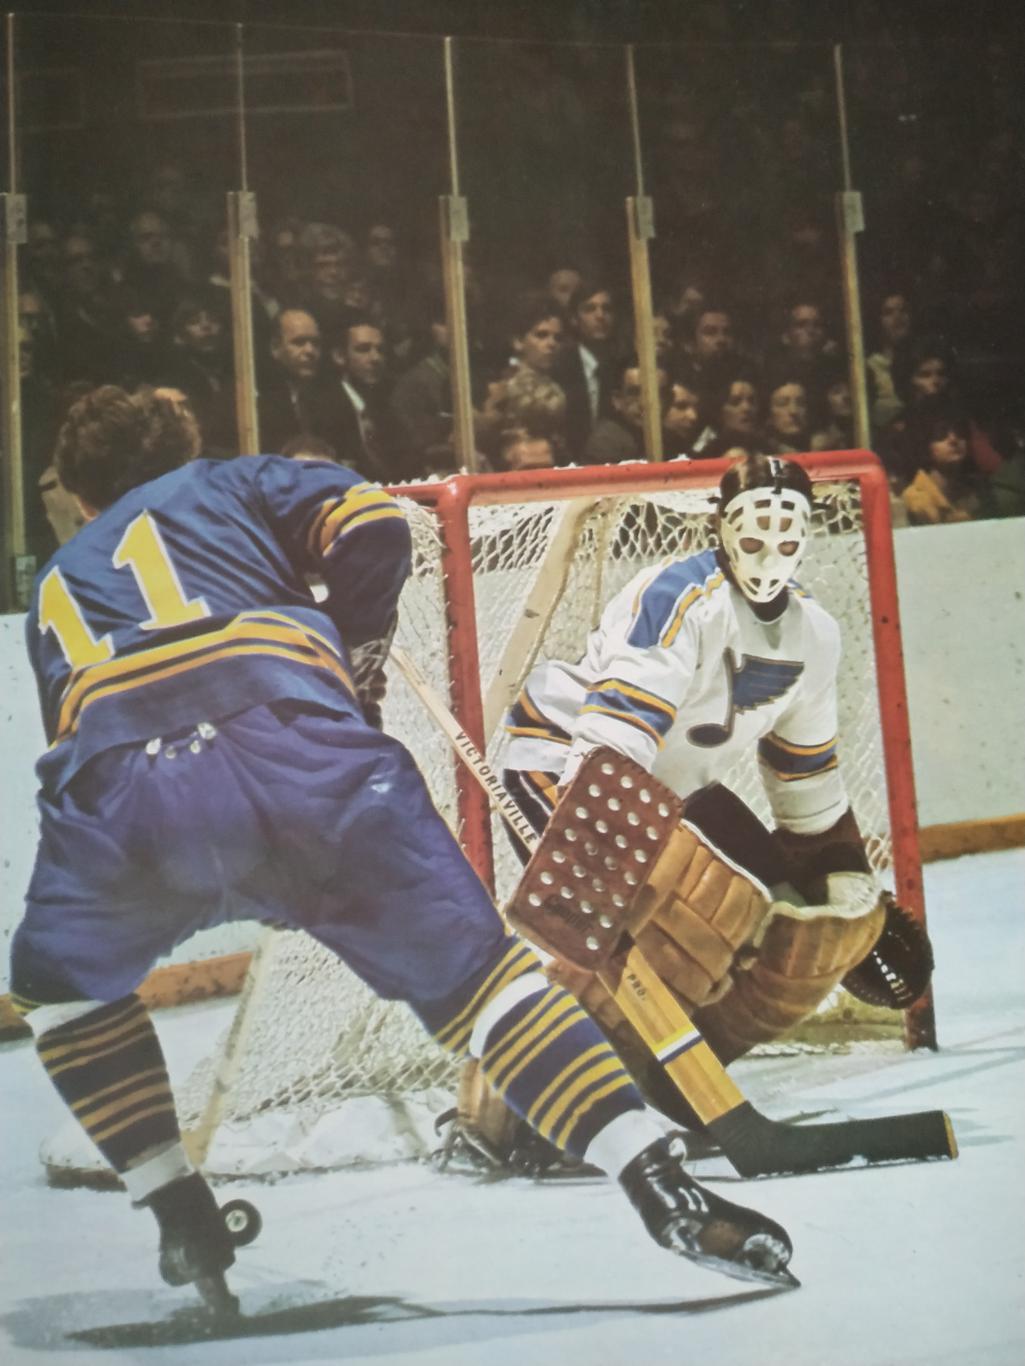 ХОККЕЙ ПРОГРАММА АЛЬБОМ БАФФАЛО НХЛ NHL 1971 OCT.16 BUFFALO PROGRAM 2